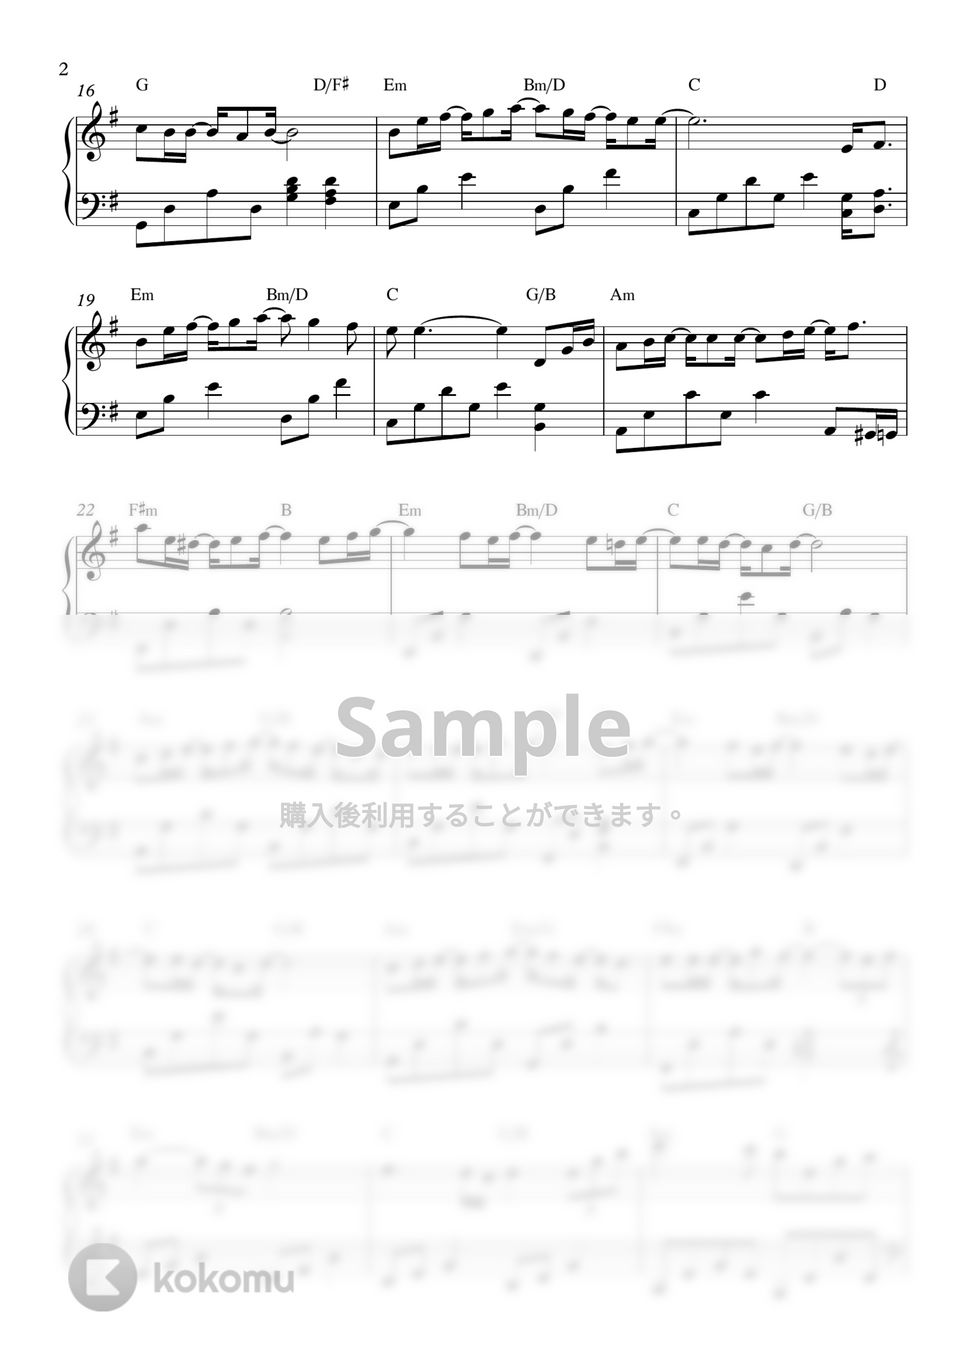 SG Wannabe - 살다가(生きて) (Easy Key) by SweetPiano